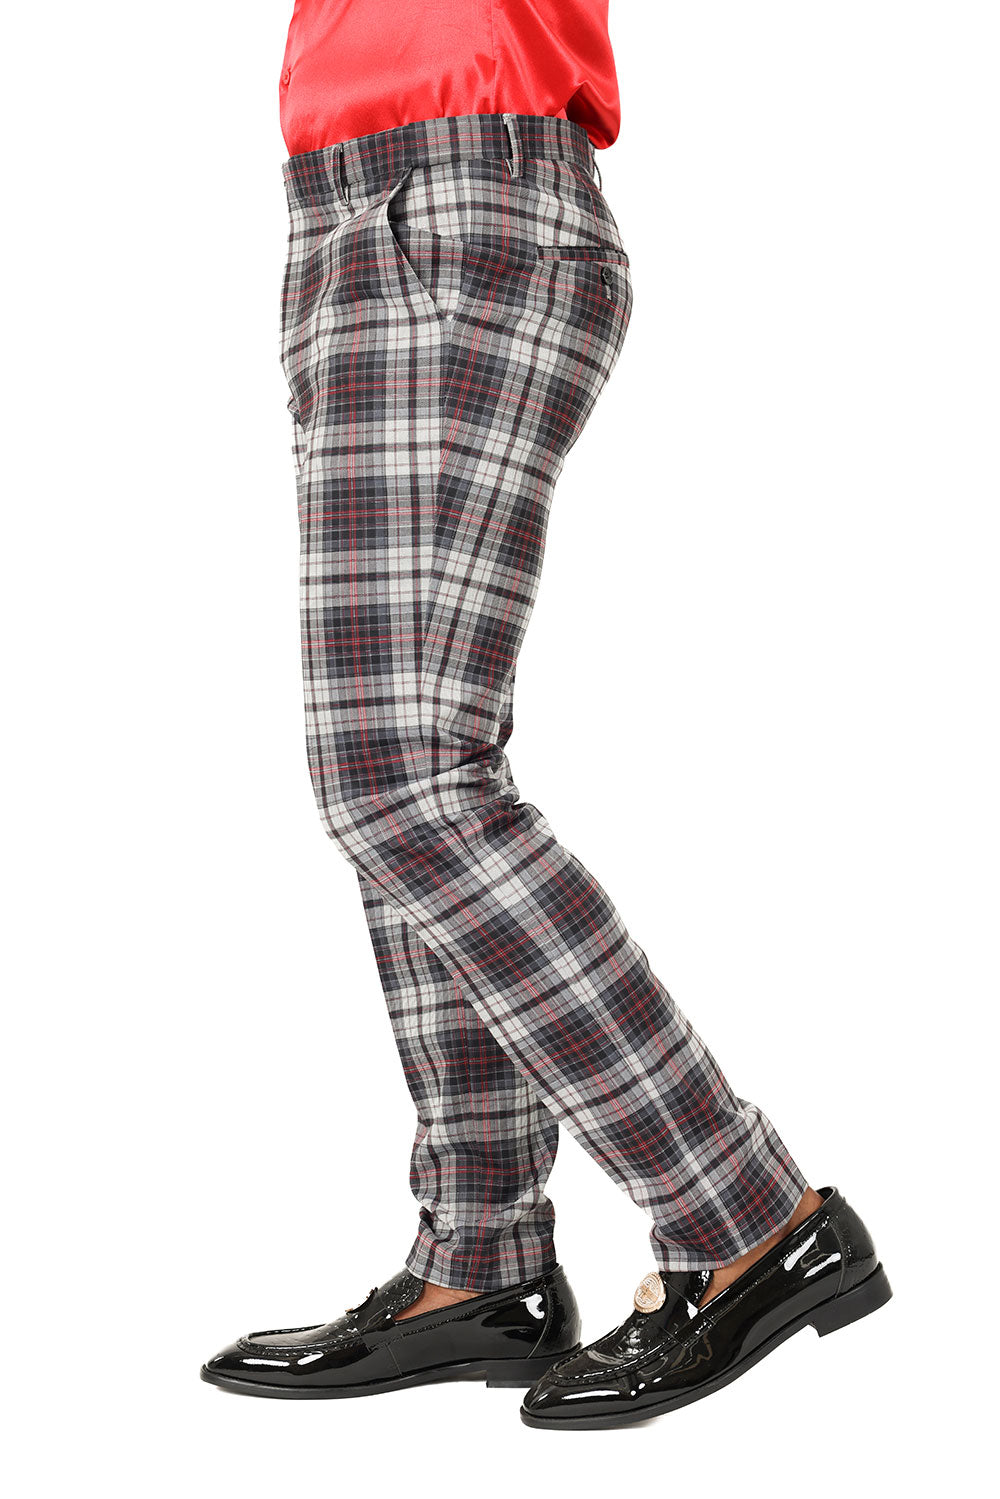 Barabas Men's Checkered Plaid Basic Chino Dress Pants 2CP191 Black Red